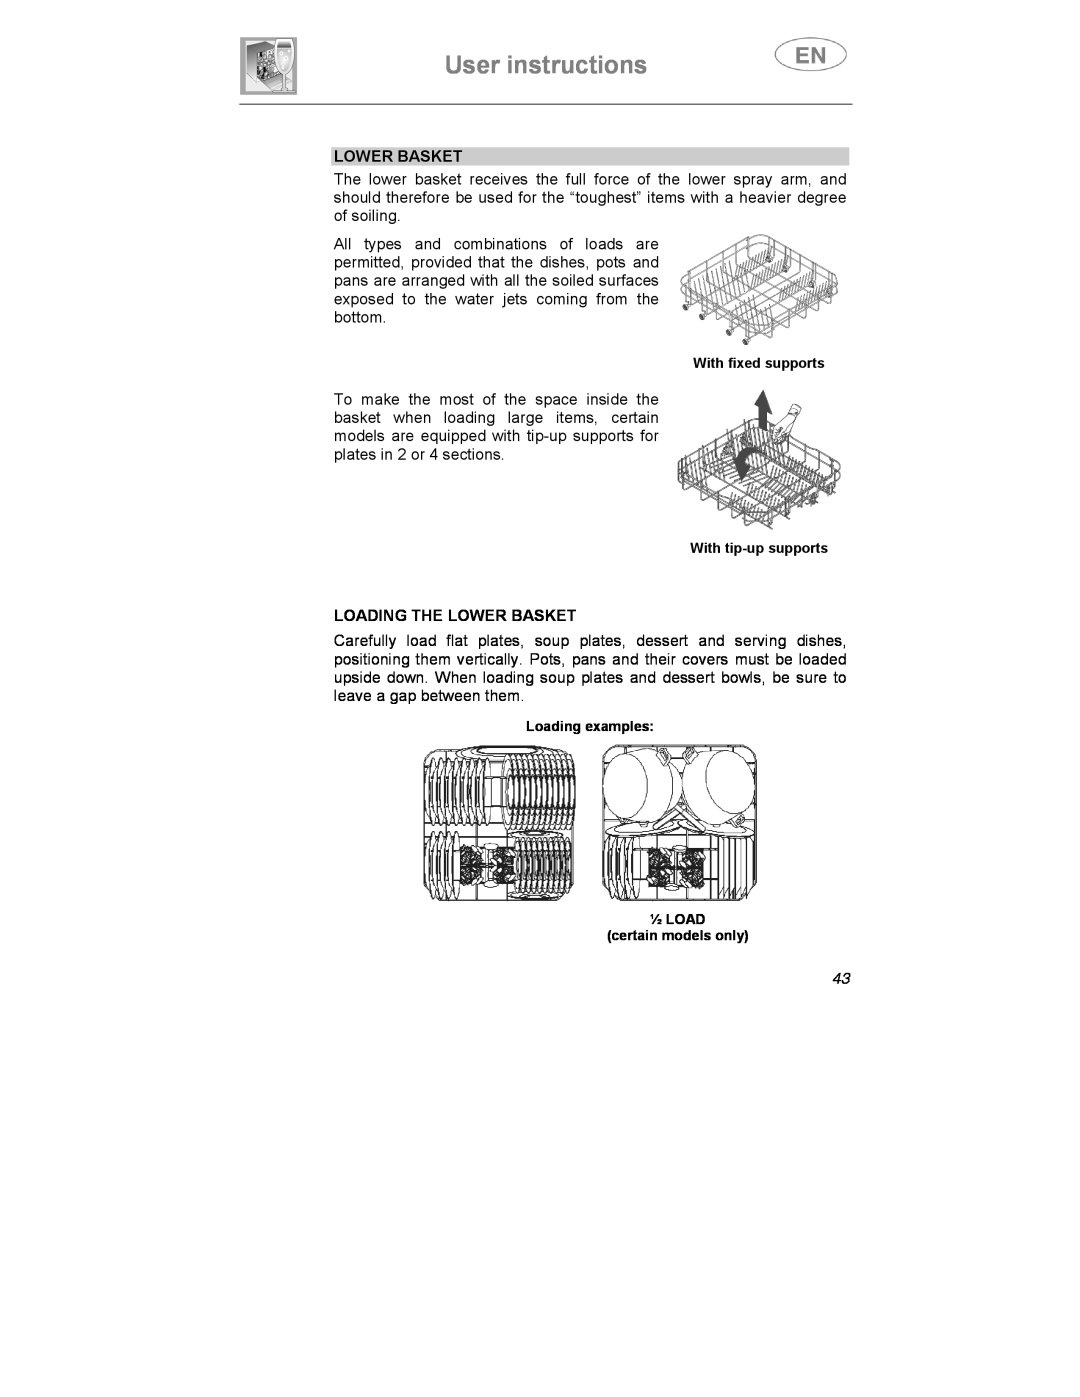 Smeg KLS1257B, KLS01-2 instruction manual User instructions, Loading The Lower Basket 